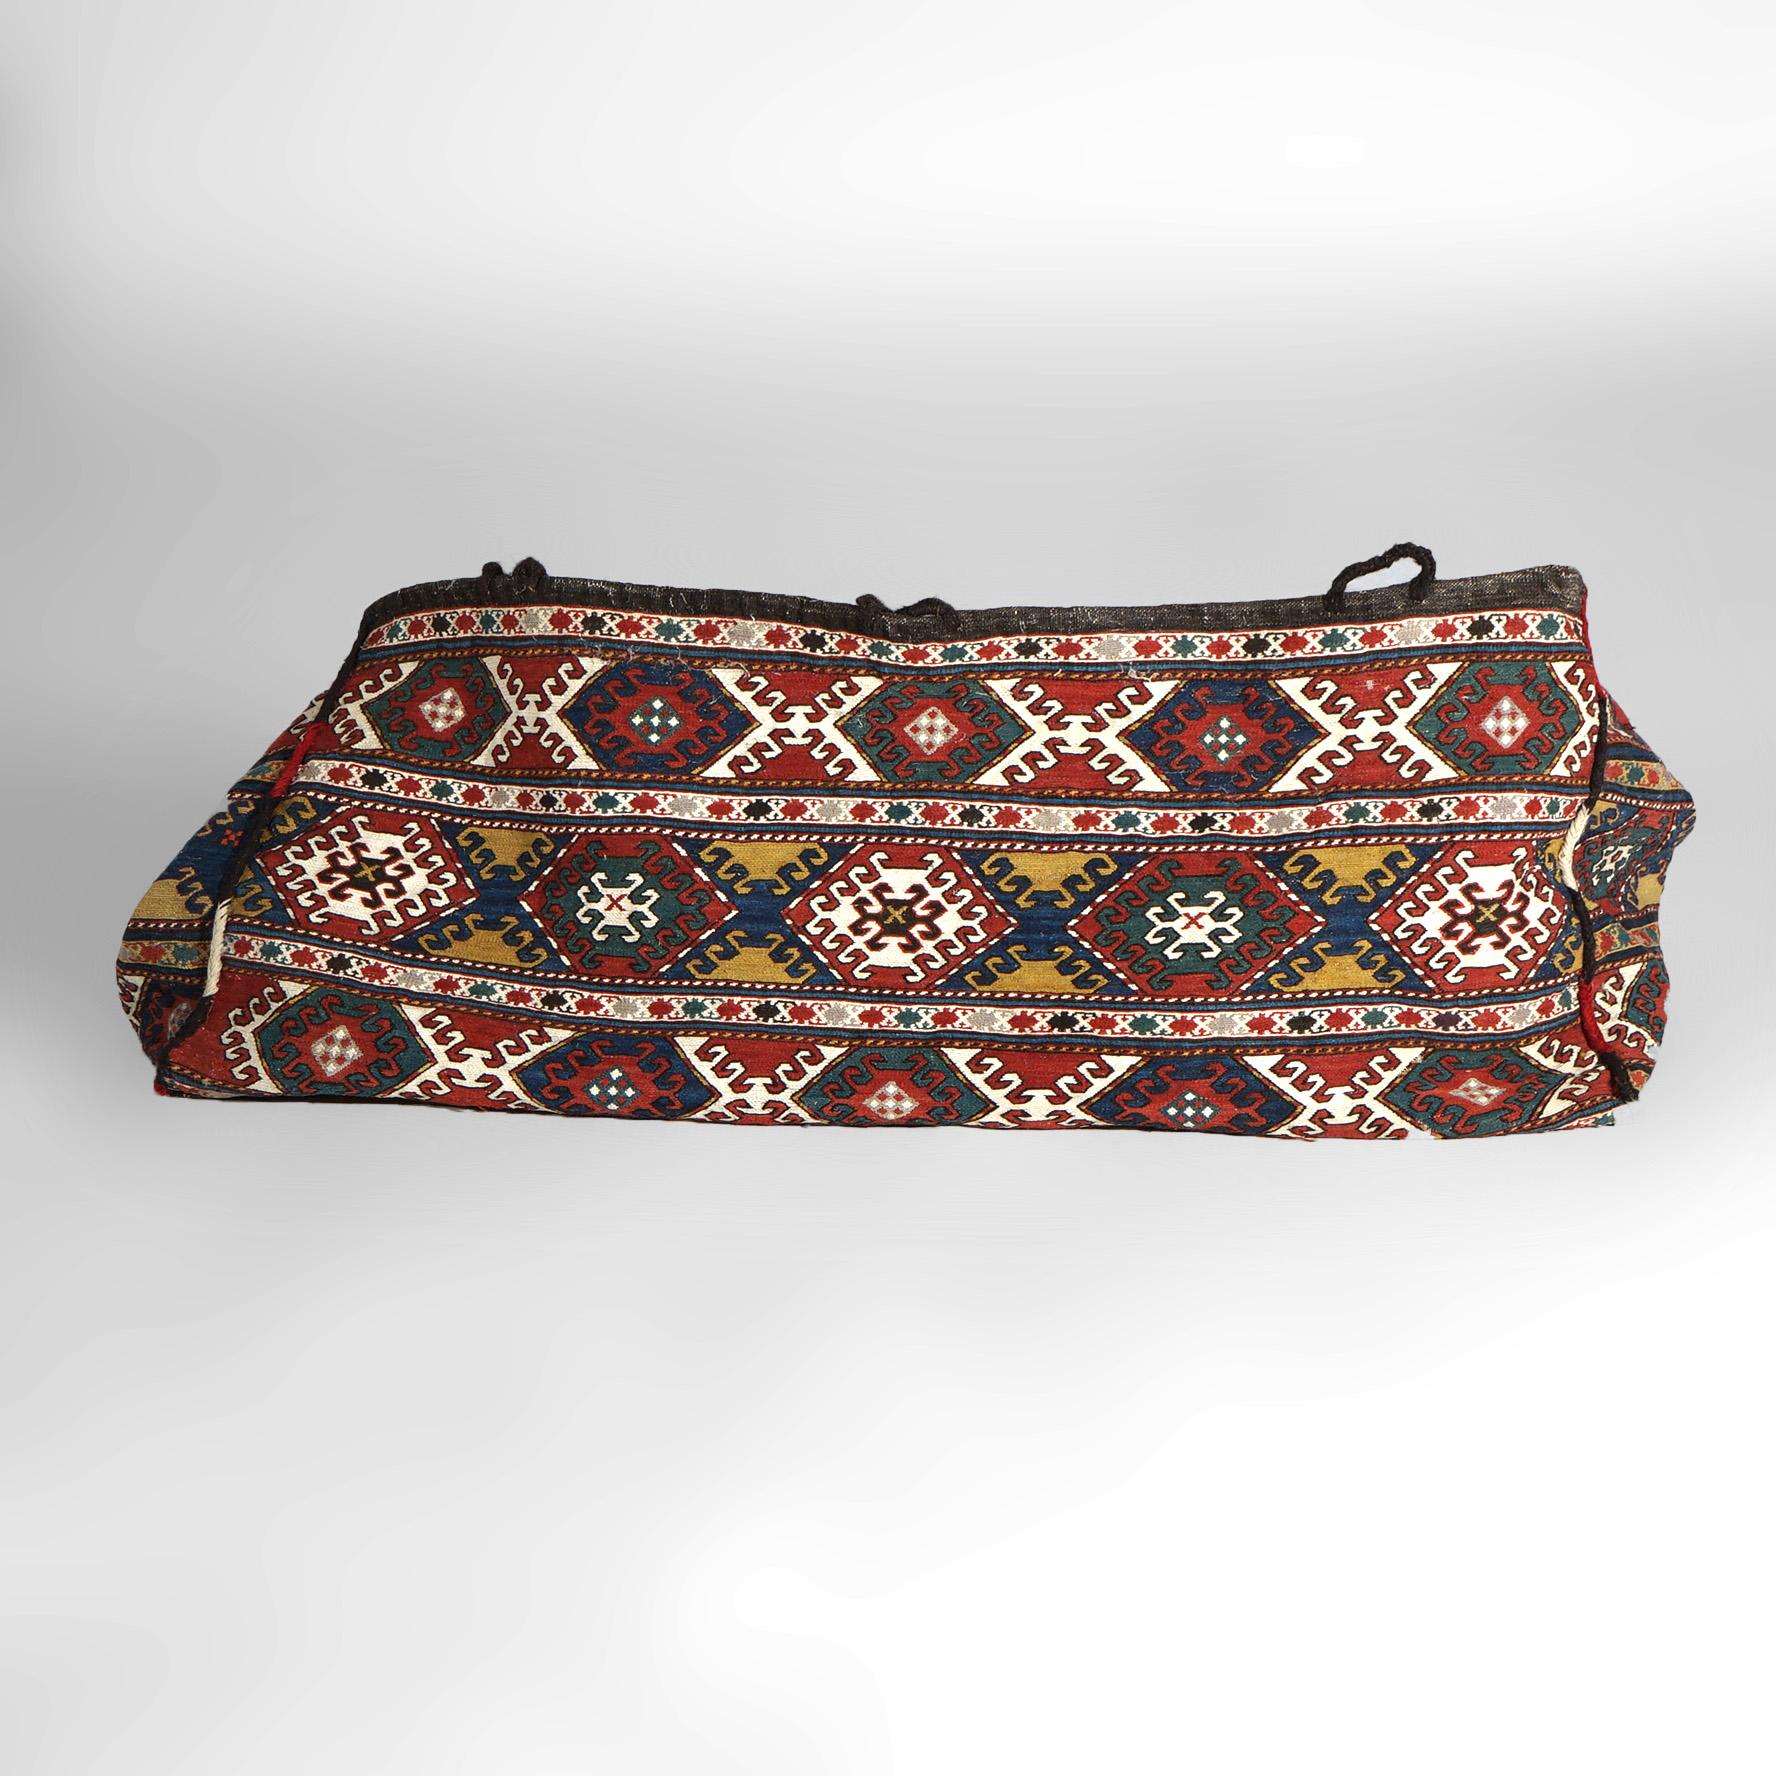 Antique Kurdish Soumak Oriental Bag C1940

Measures - 18